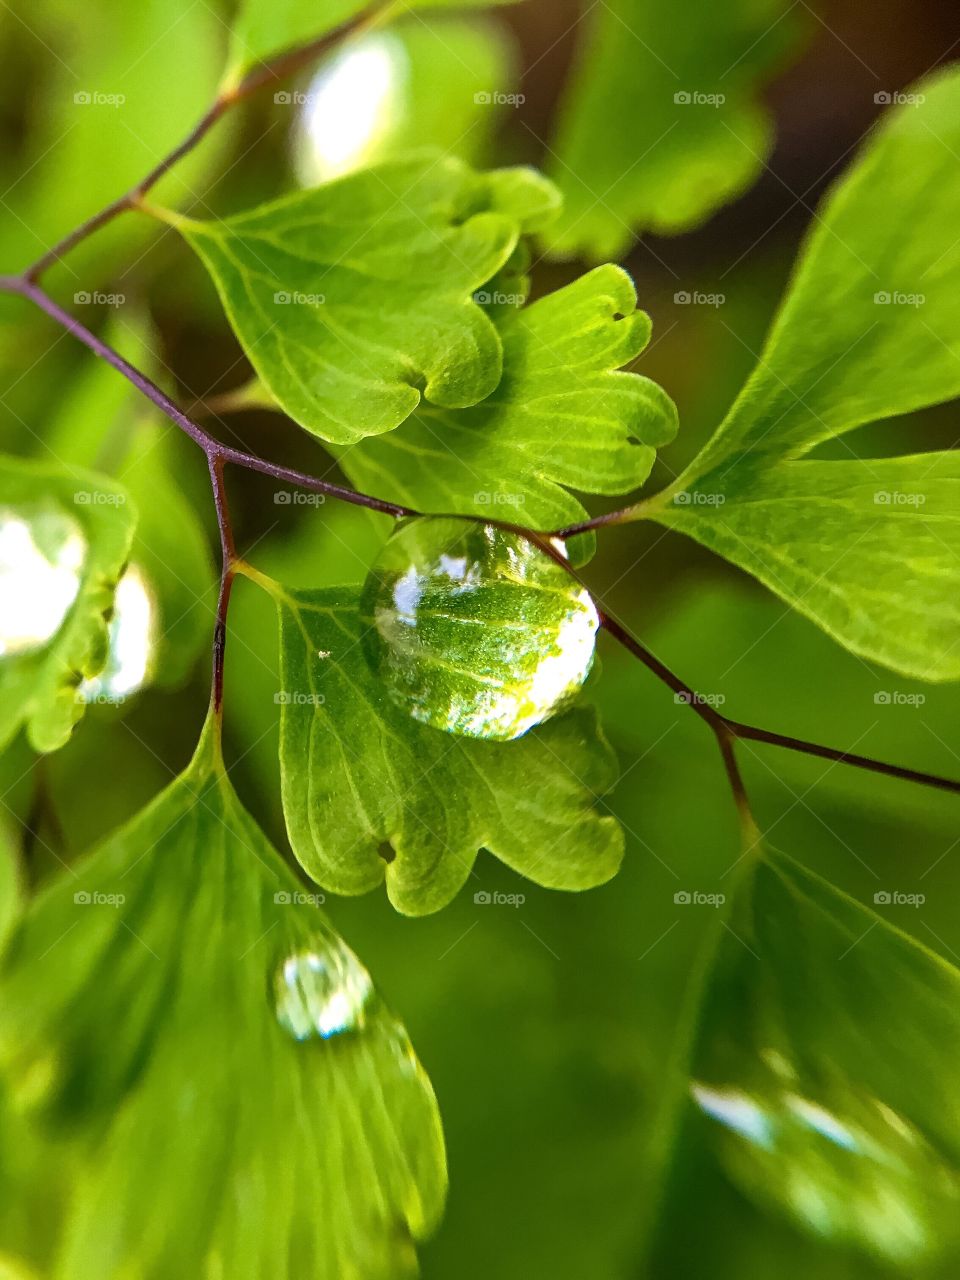 Drop on leaf 